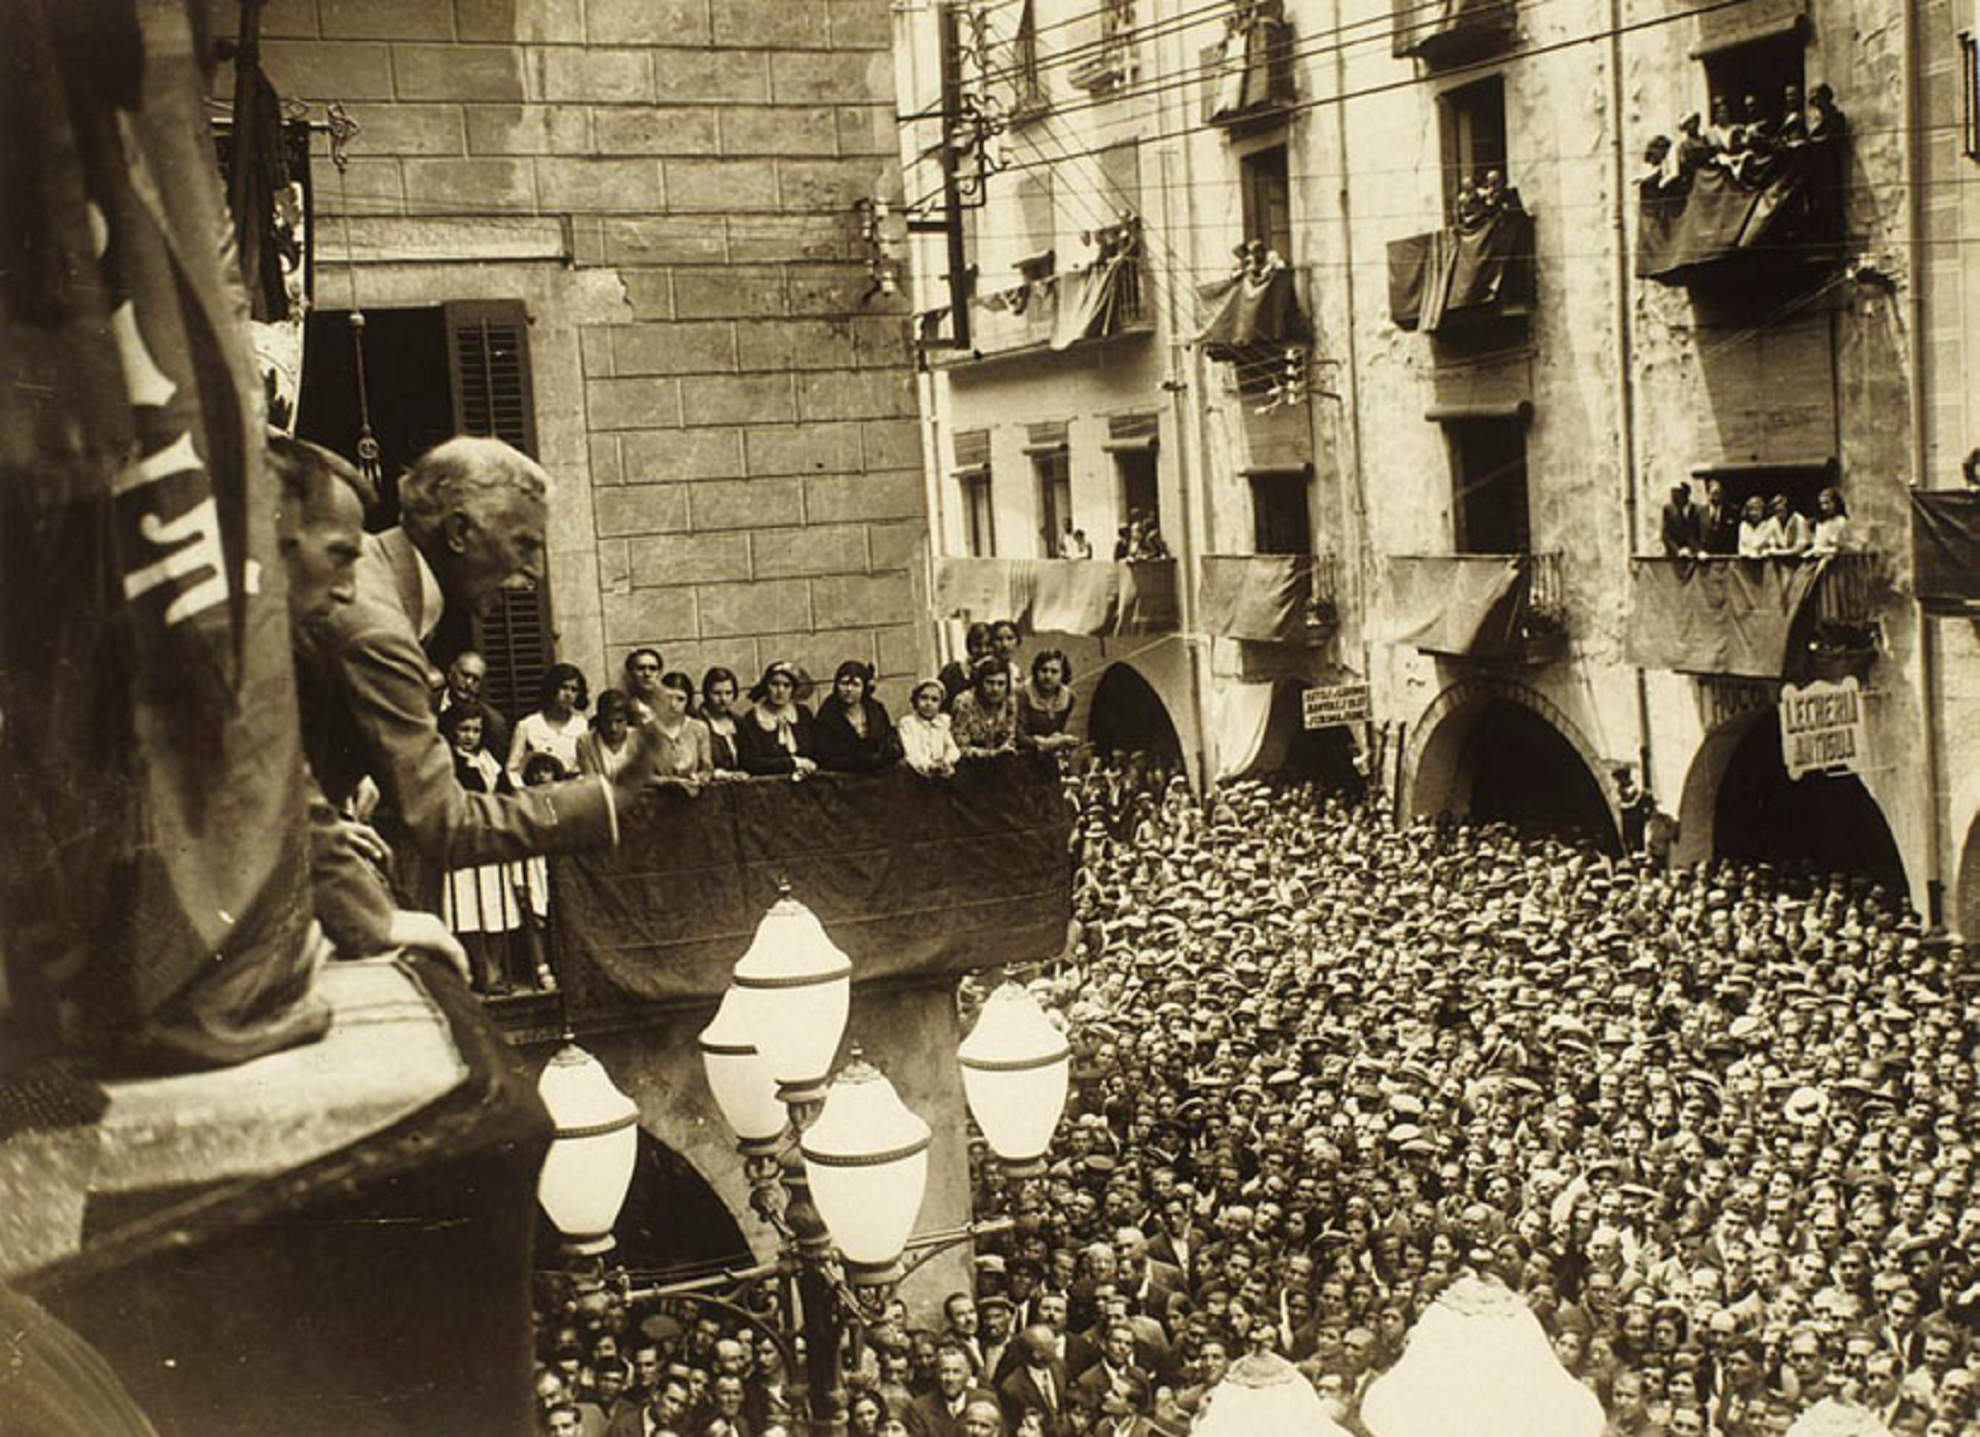 Nace Francesc Macià, la figura política más destacada del siglo XX catalán